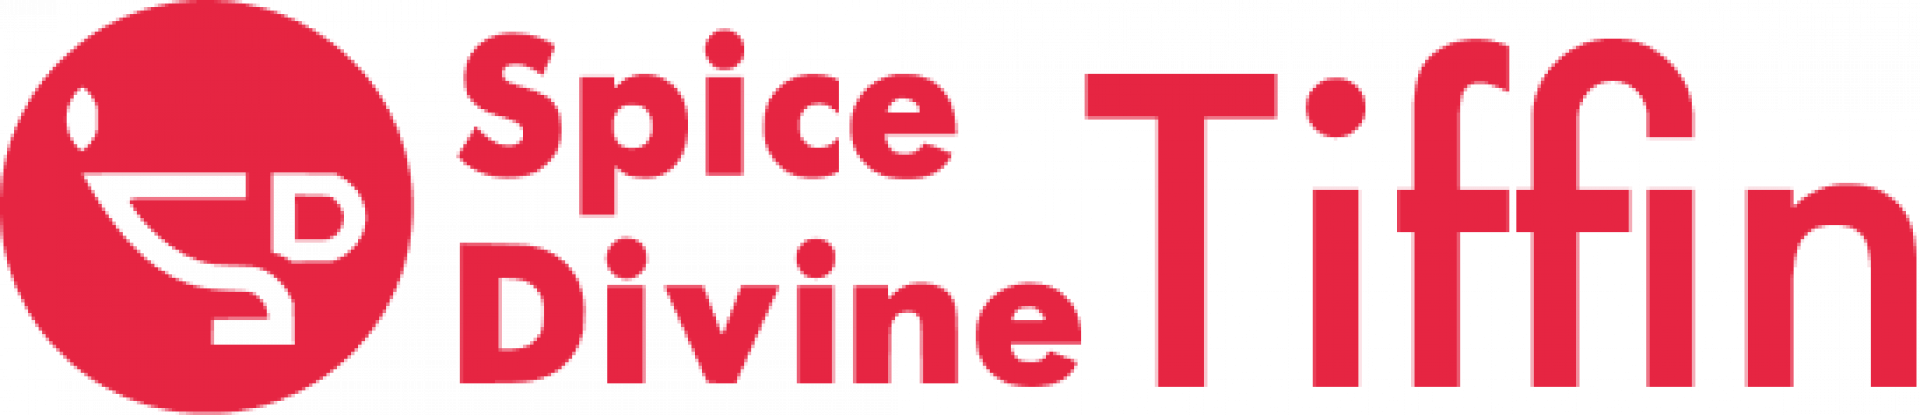 Spice Divine Tiffin logo